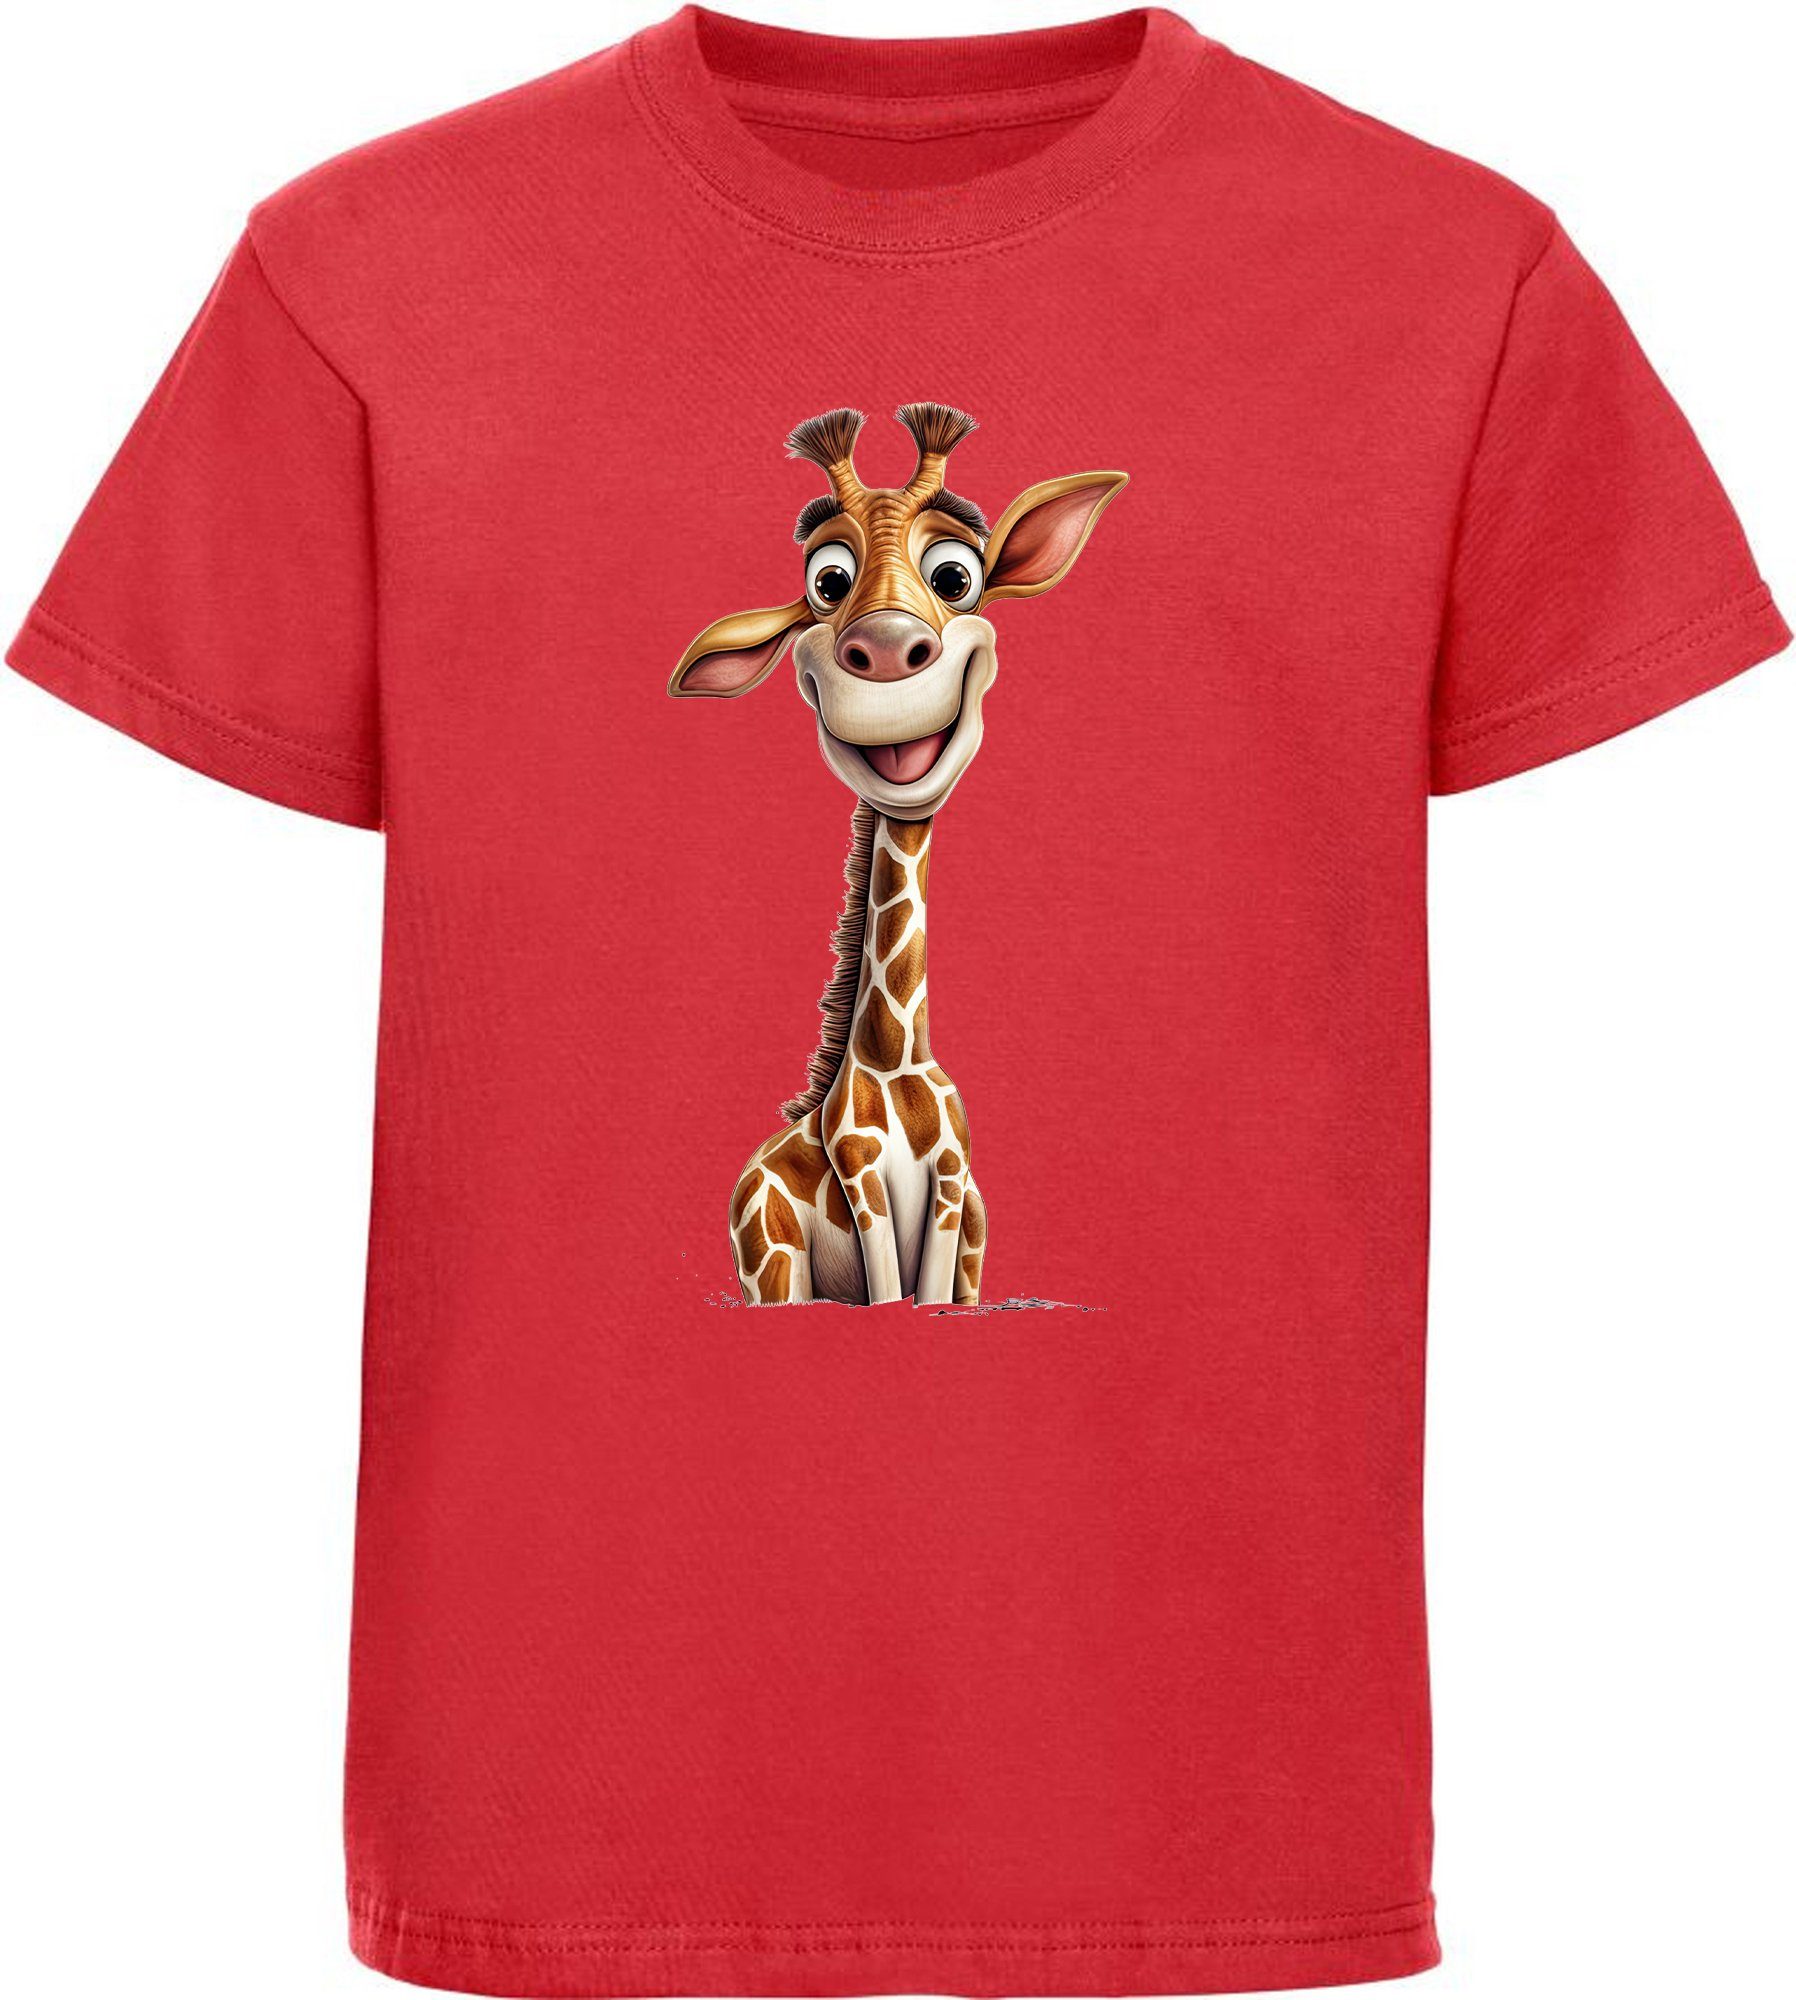 MyDesign24 T-Shirt Kinder Wildtier Print Shirt bedruckt - Baby Giraffe Baumwollshirt mit Aufdruck, i273 rot